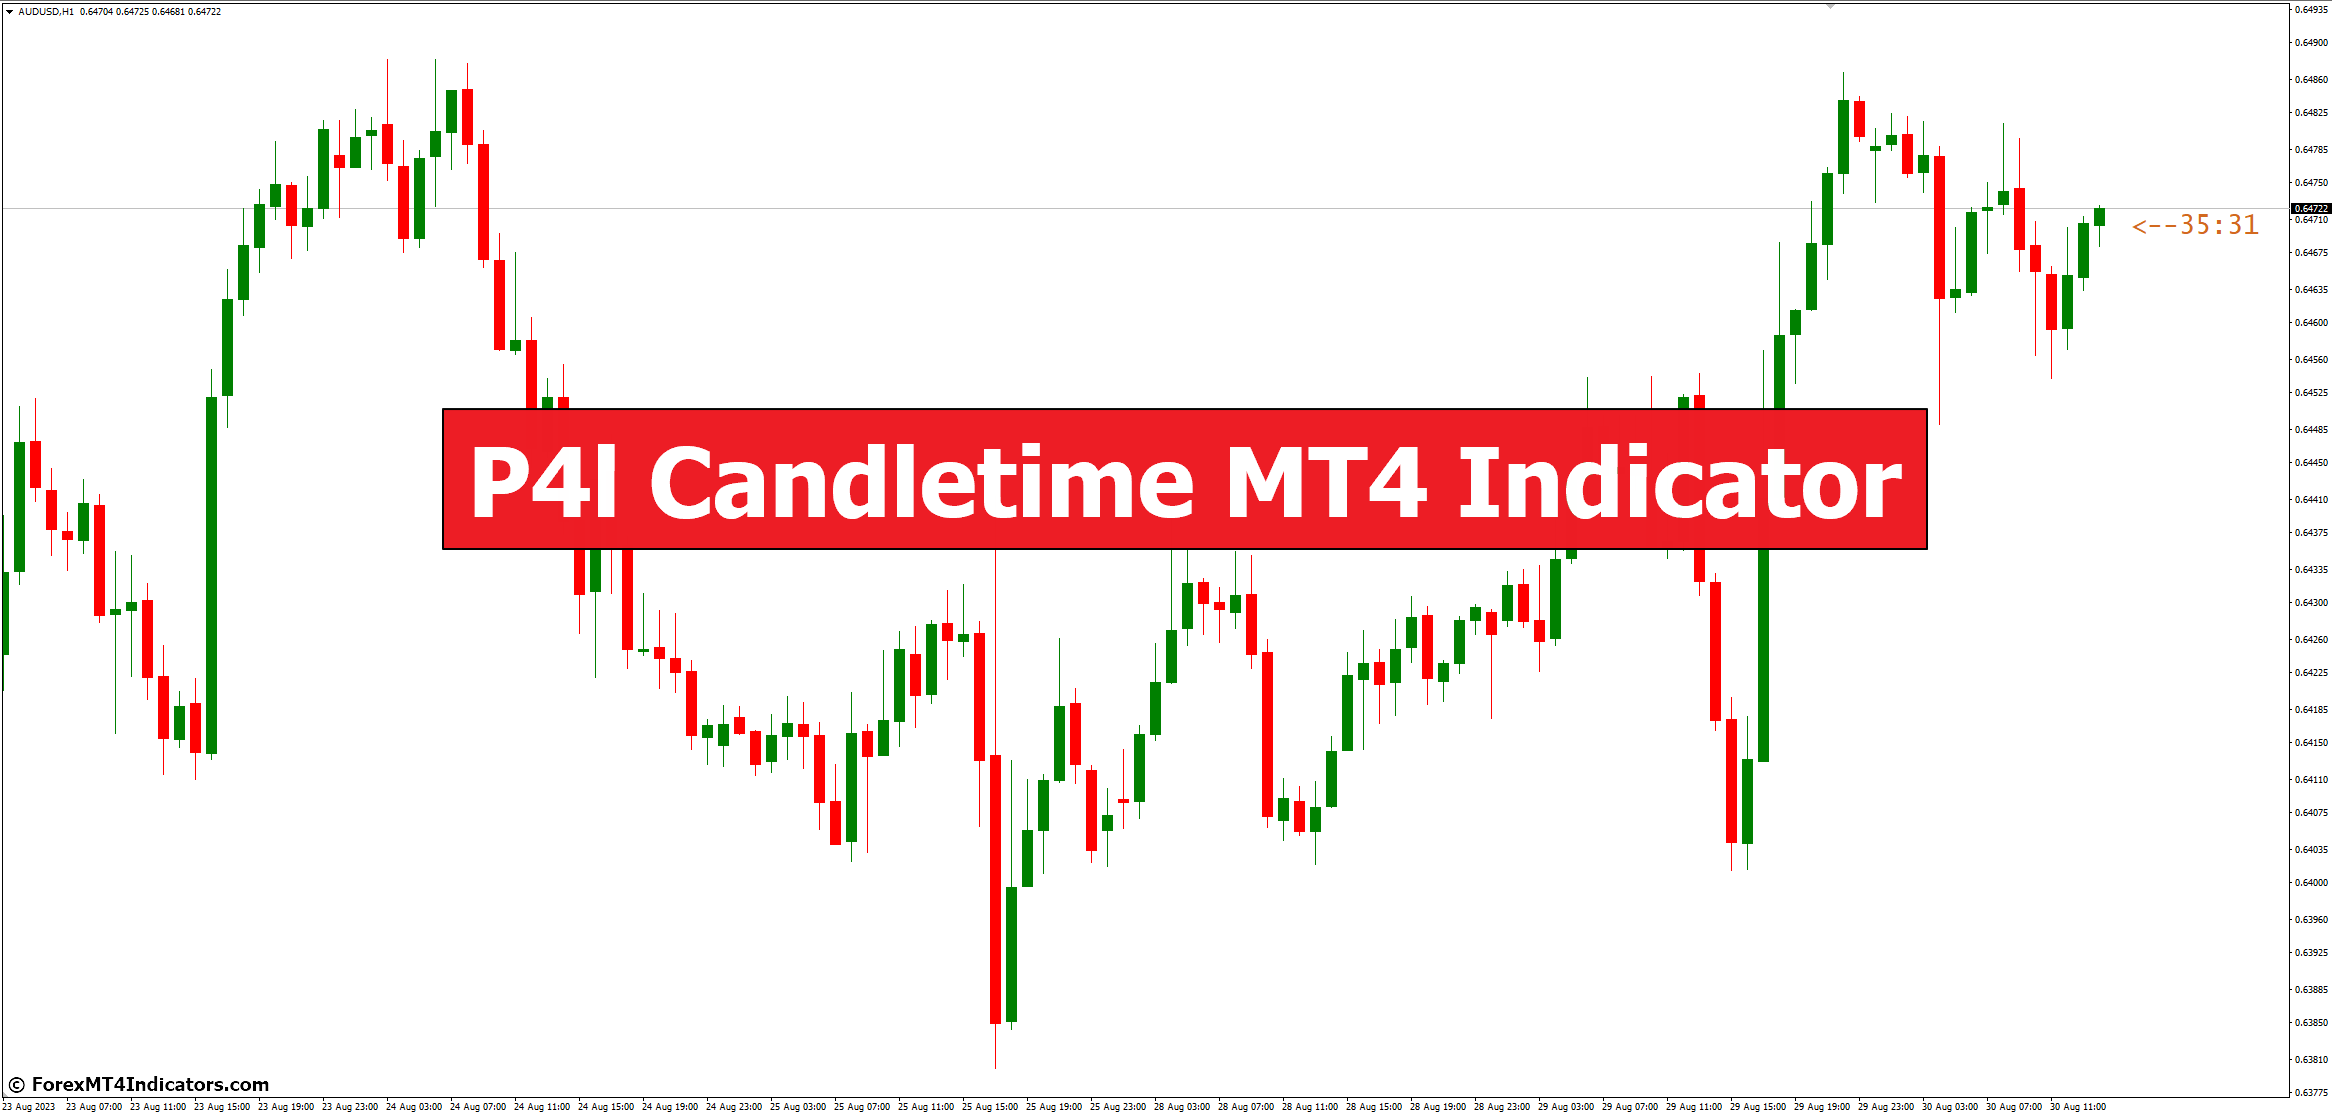 P4l Candletime MT4 Indicator